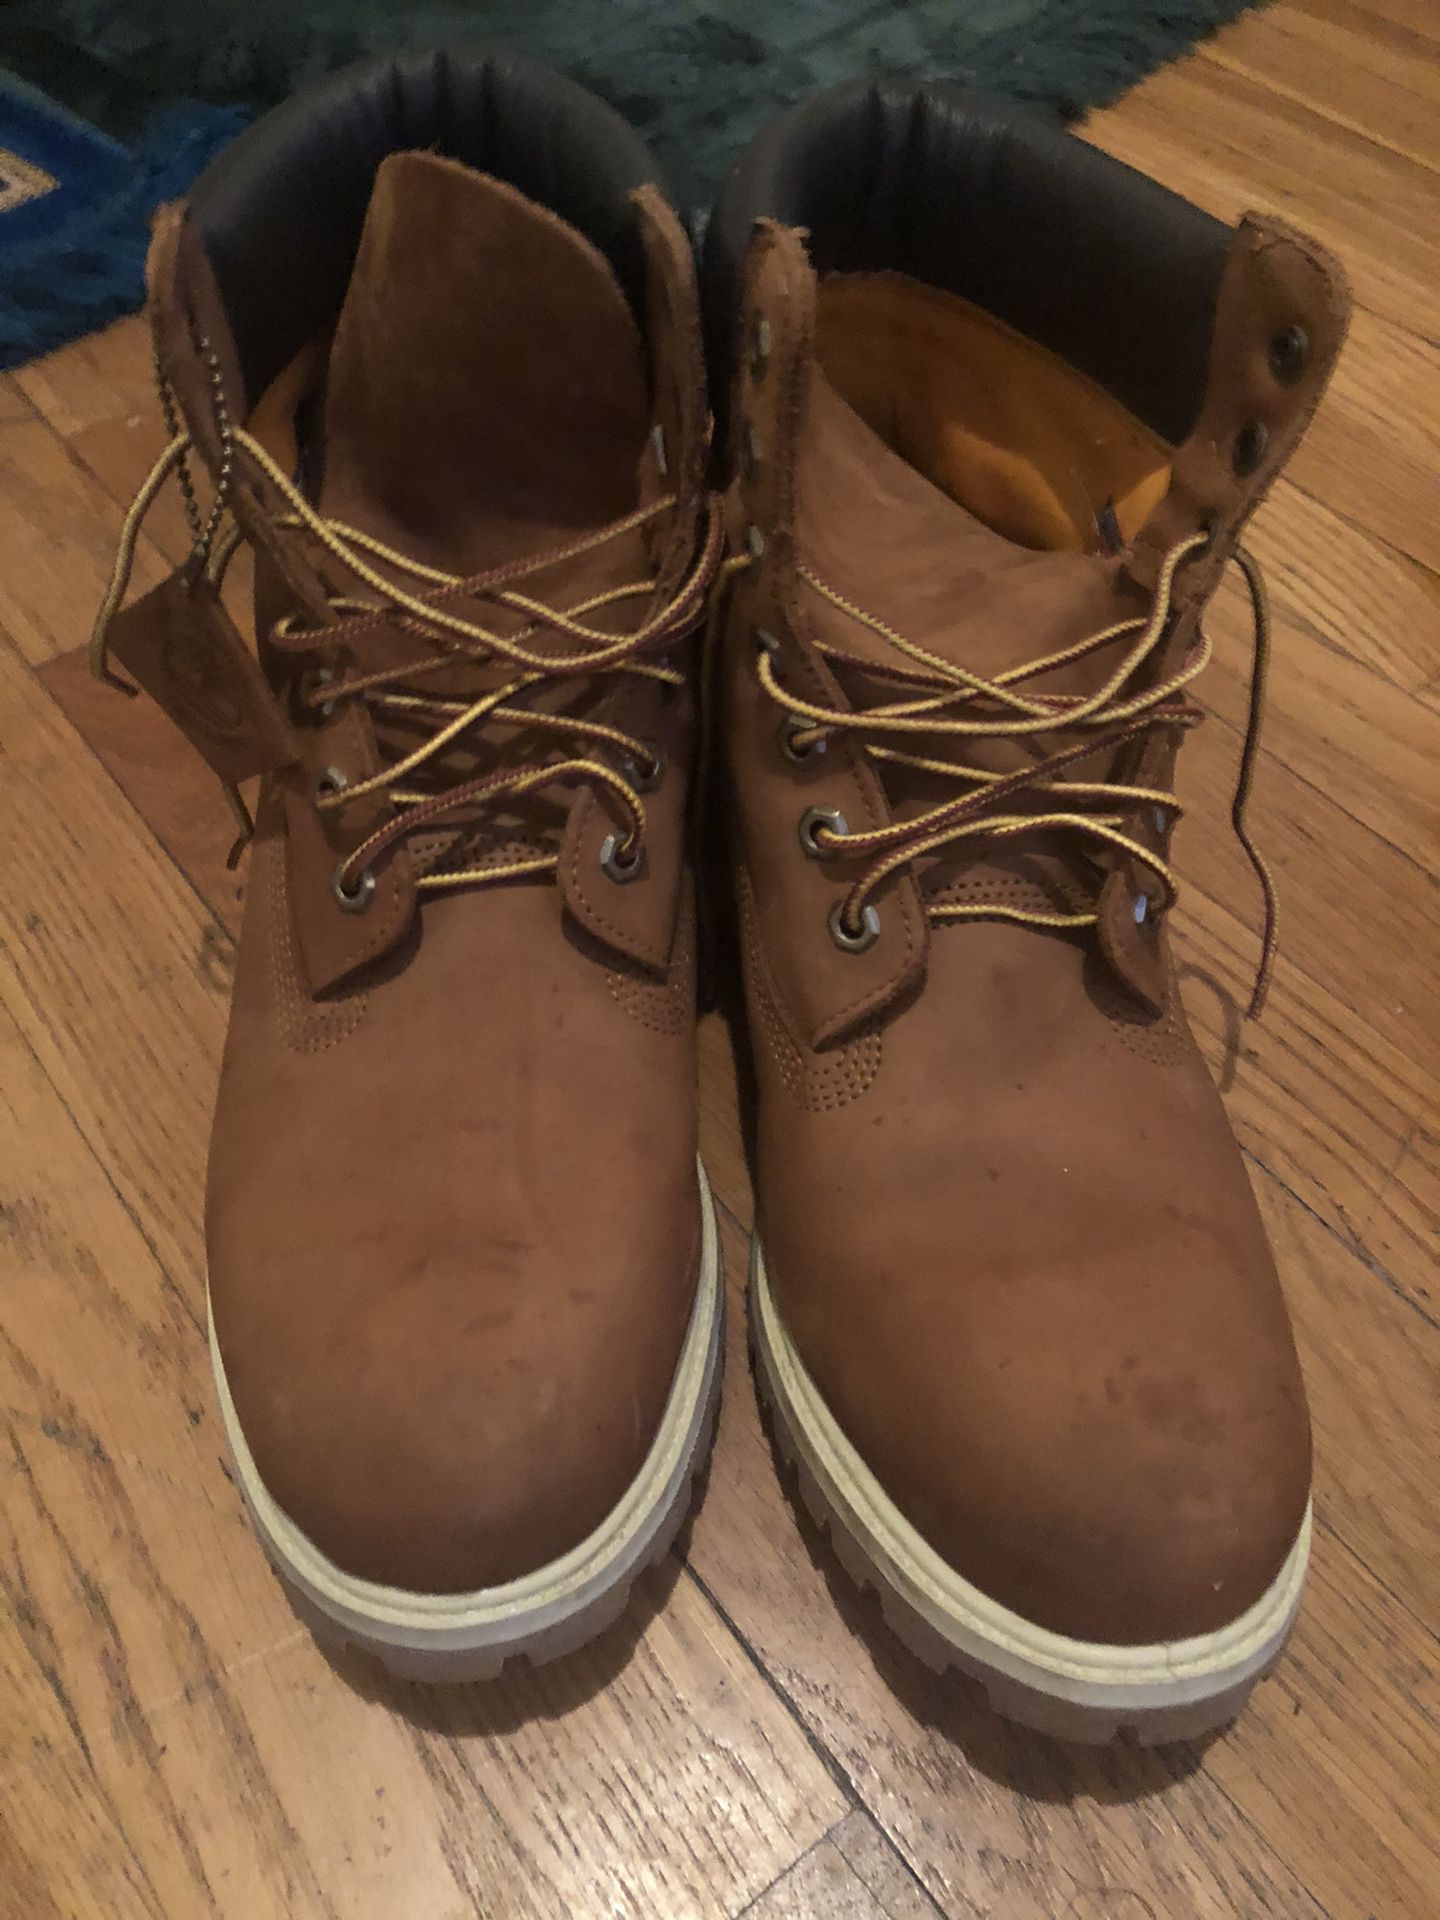 Timberland boots size 11